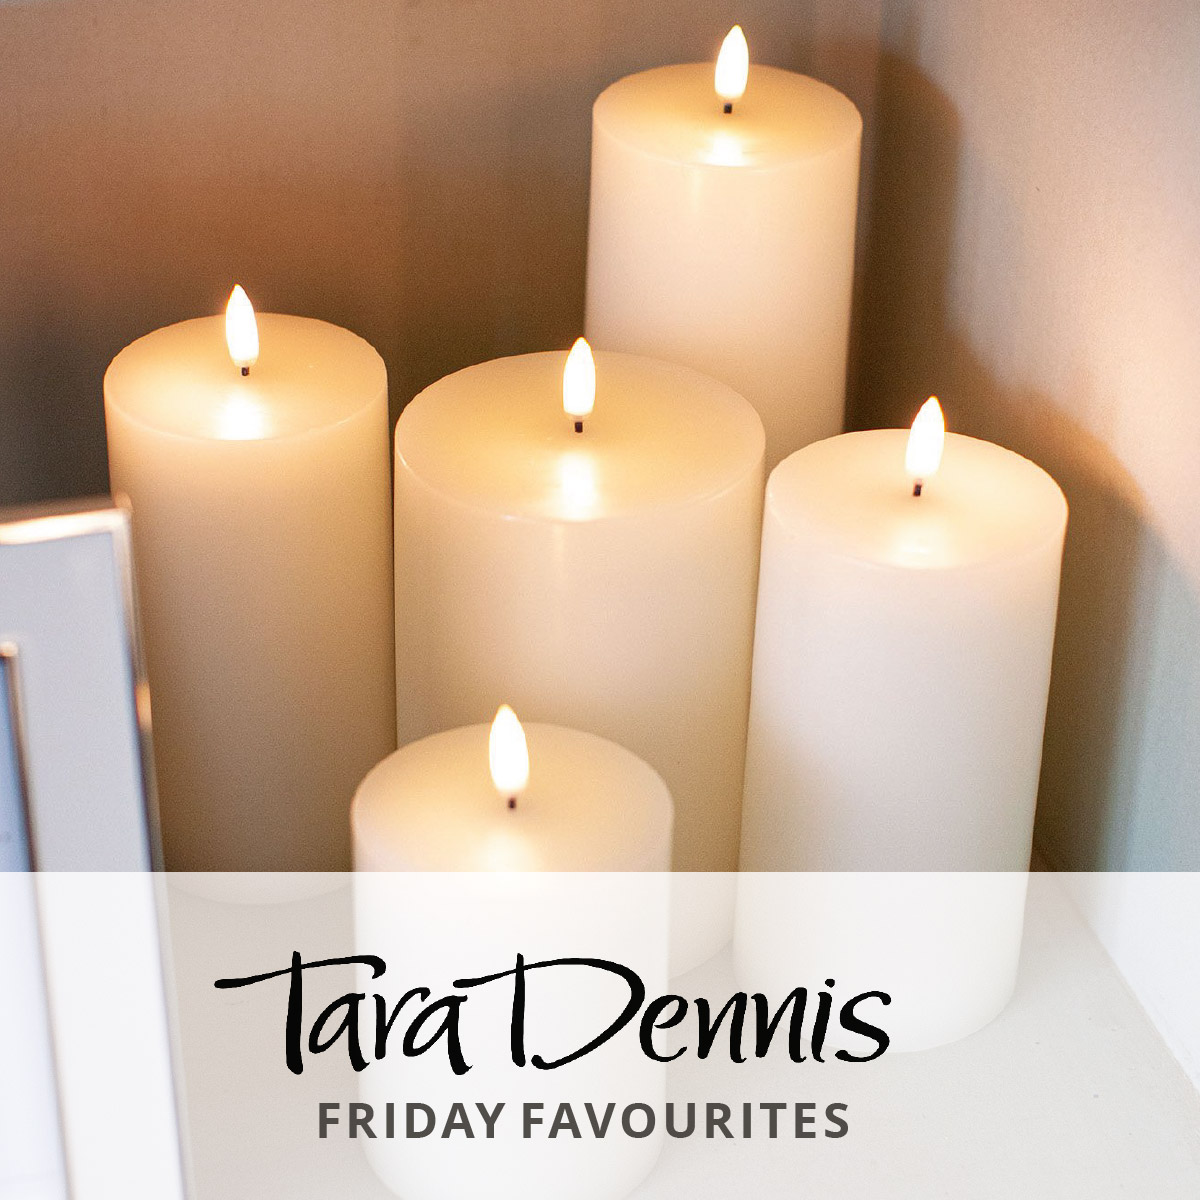 Tara Dennis Friday Favourites